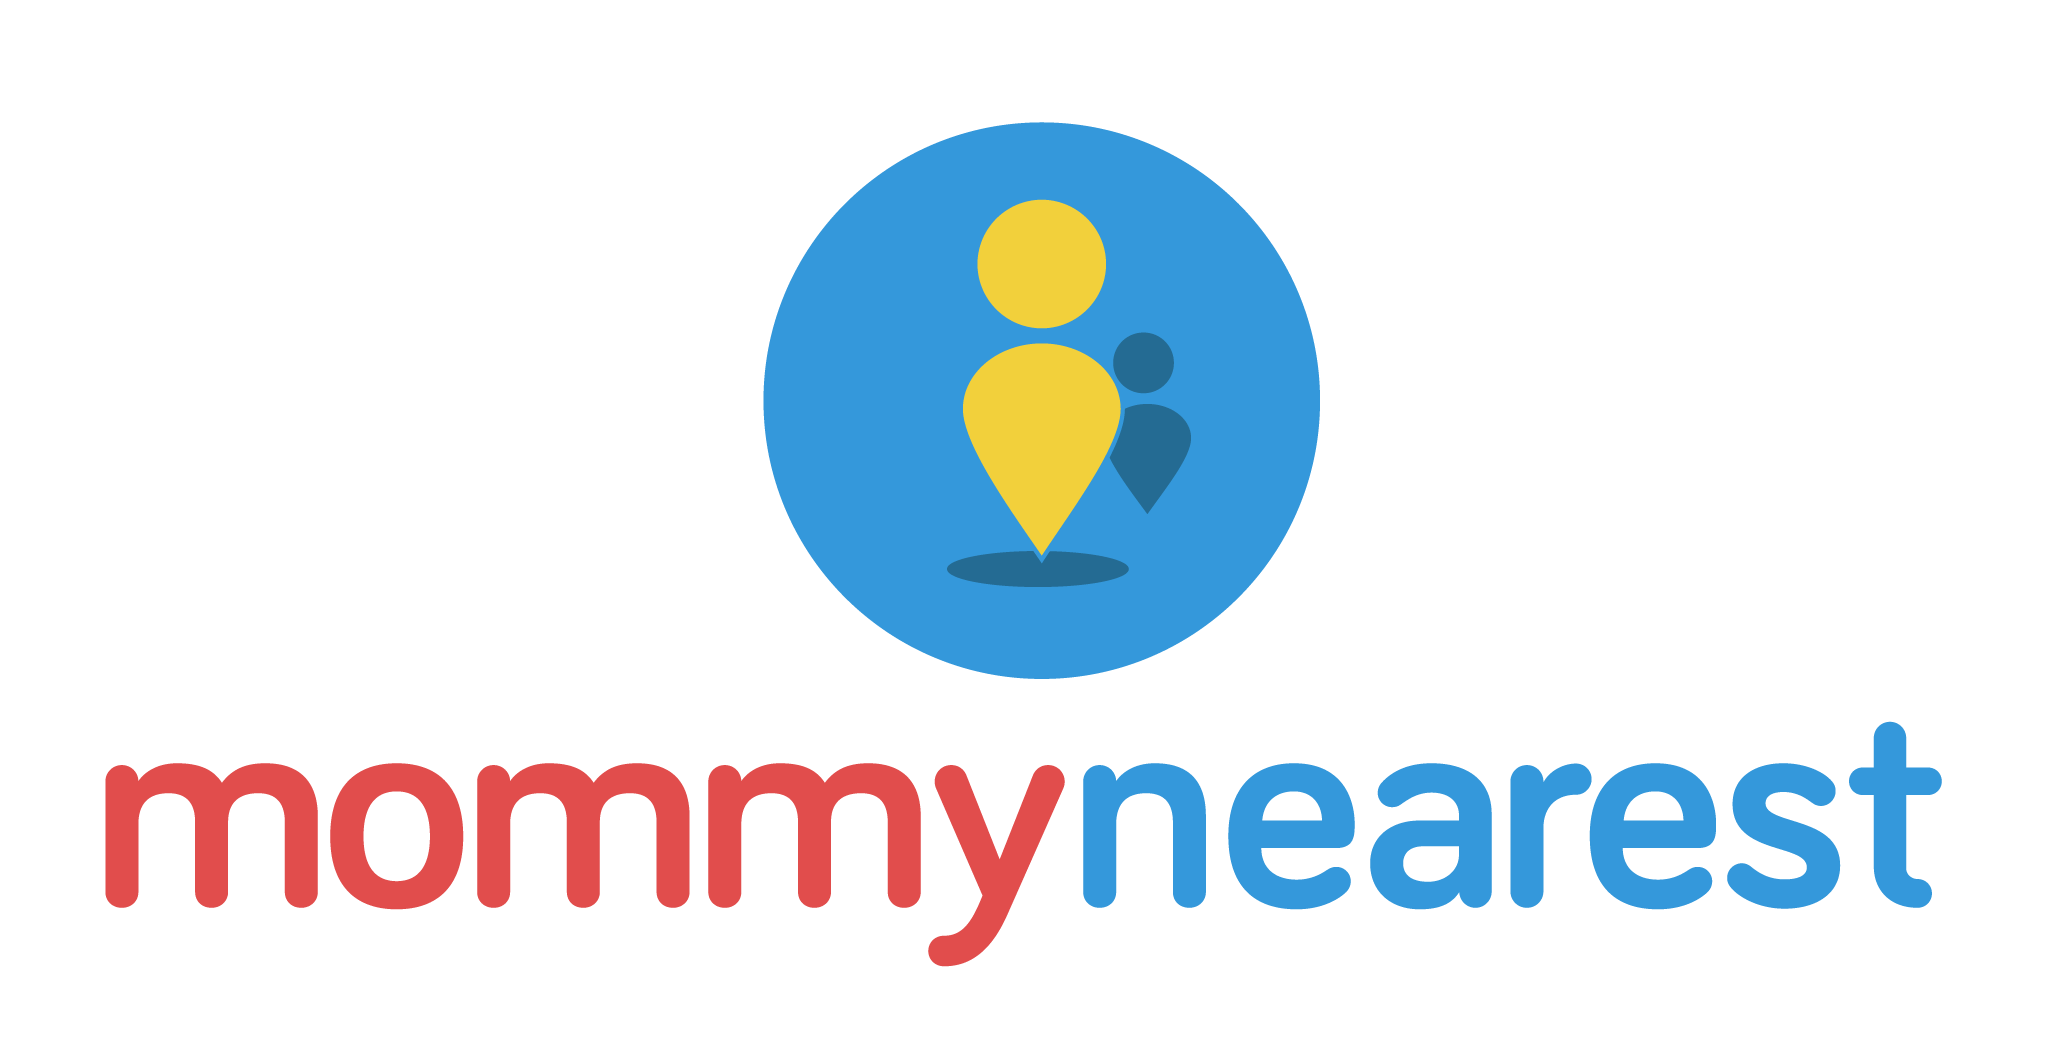 Mommy Nearest Logo.png